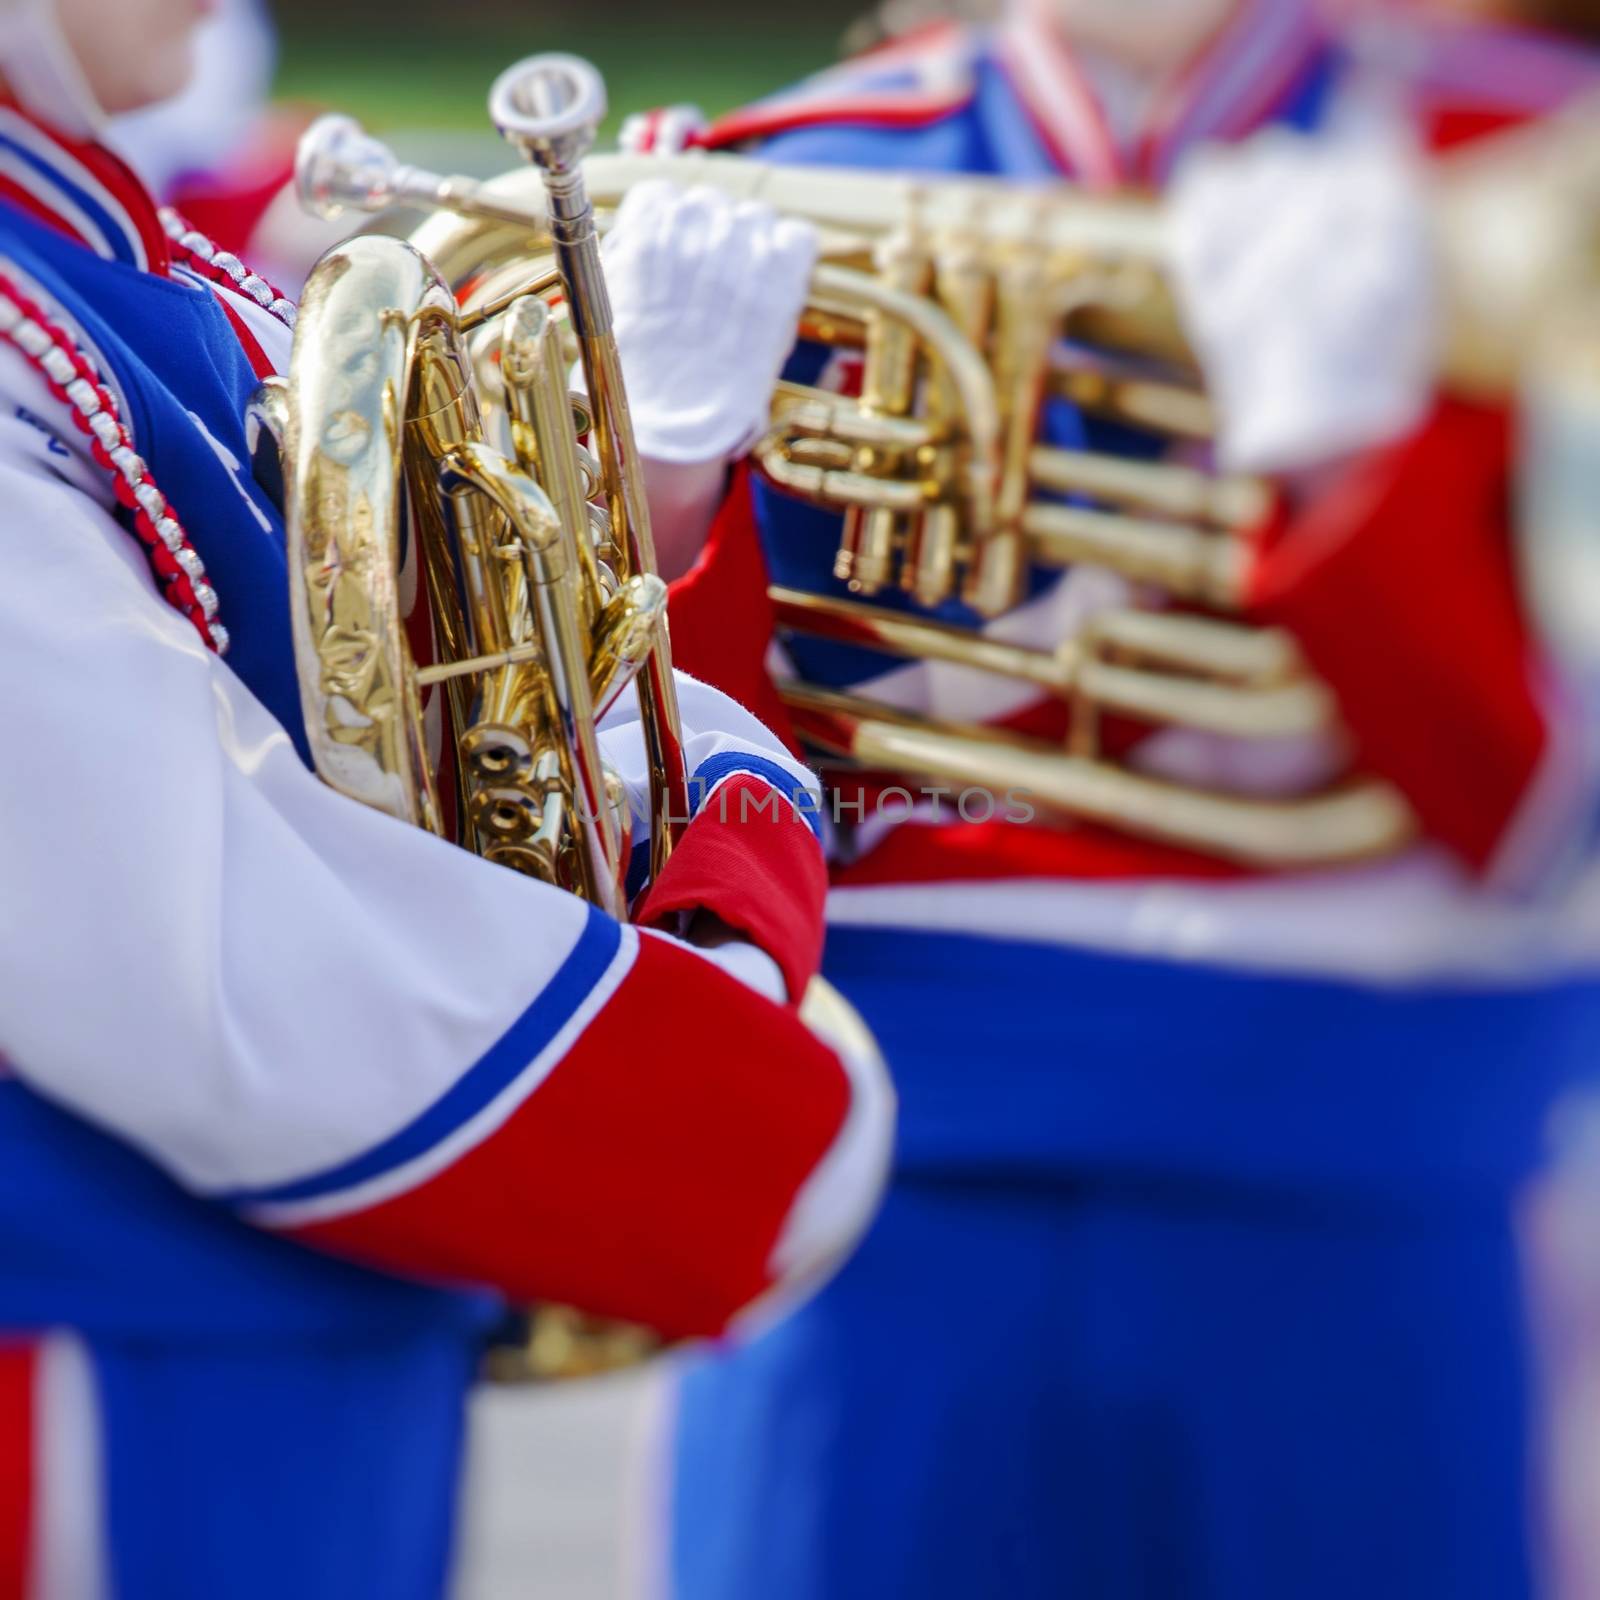 Brass Band in uniform performing  by mariusz_prusaczyk